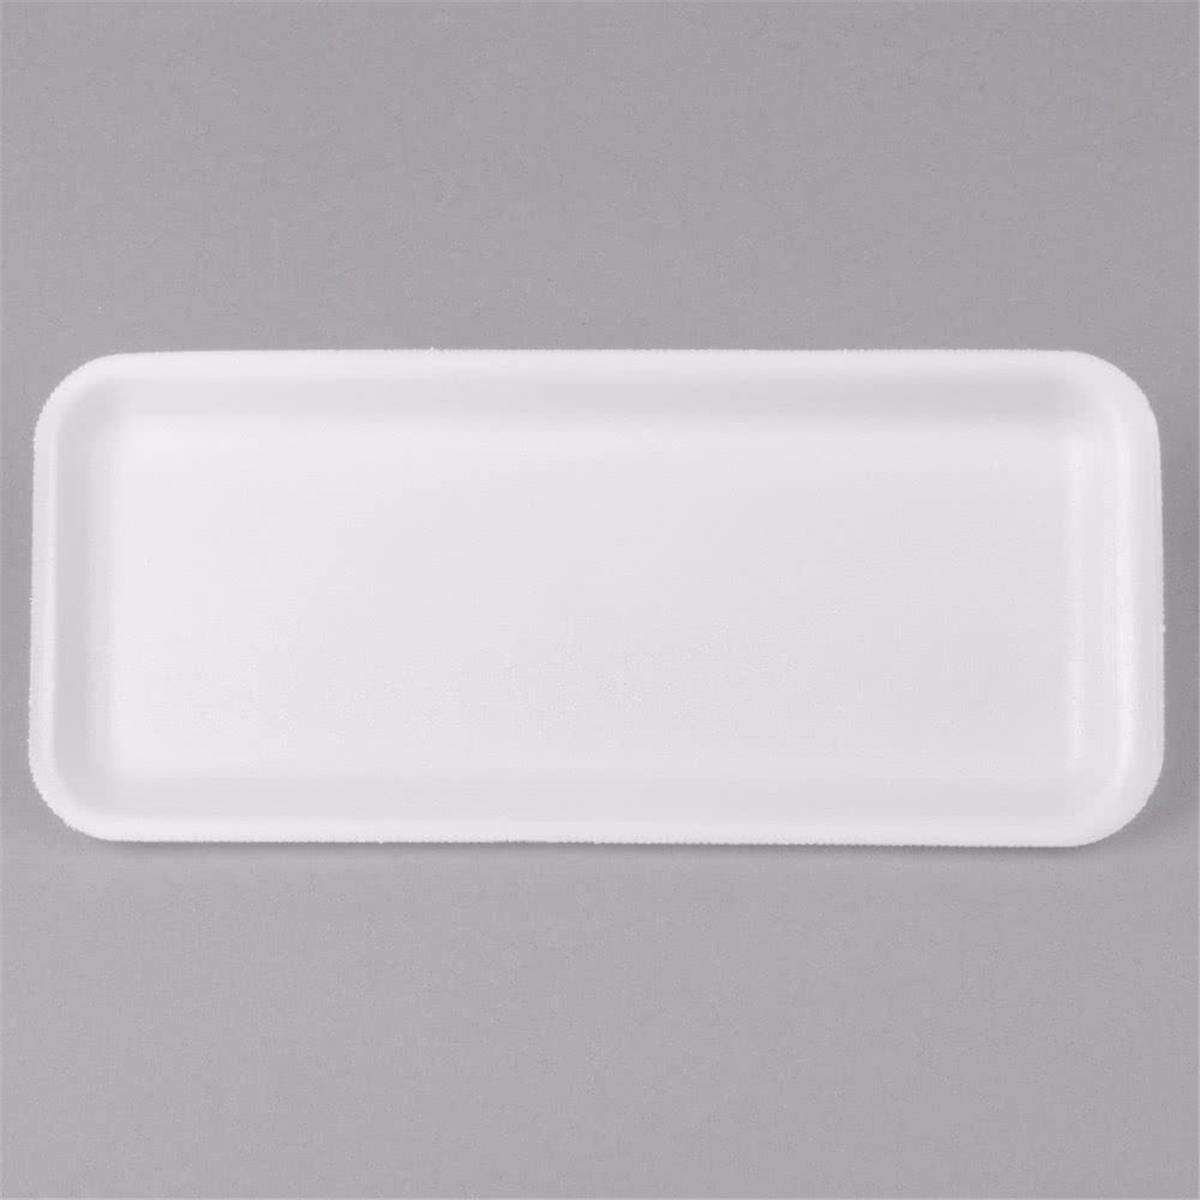 2010340w00 Cpc Foam Tray, White - Case Of 500